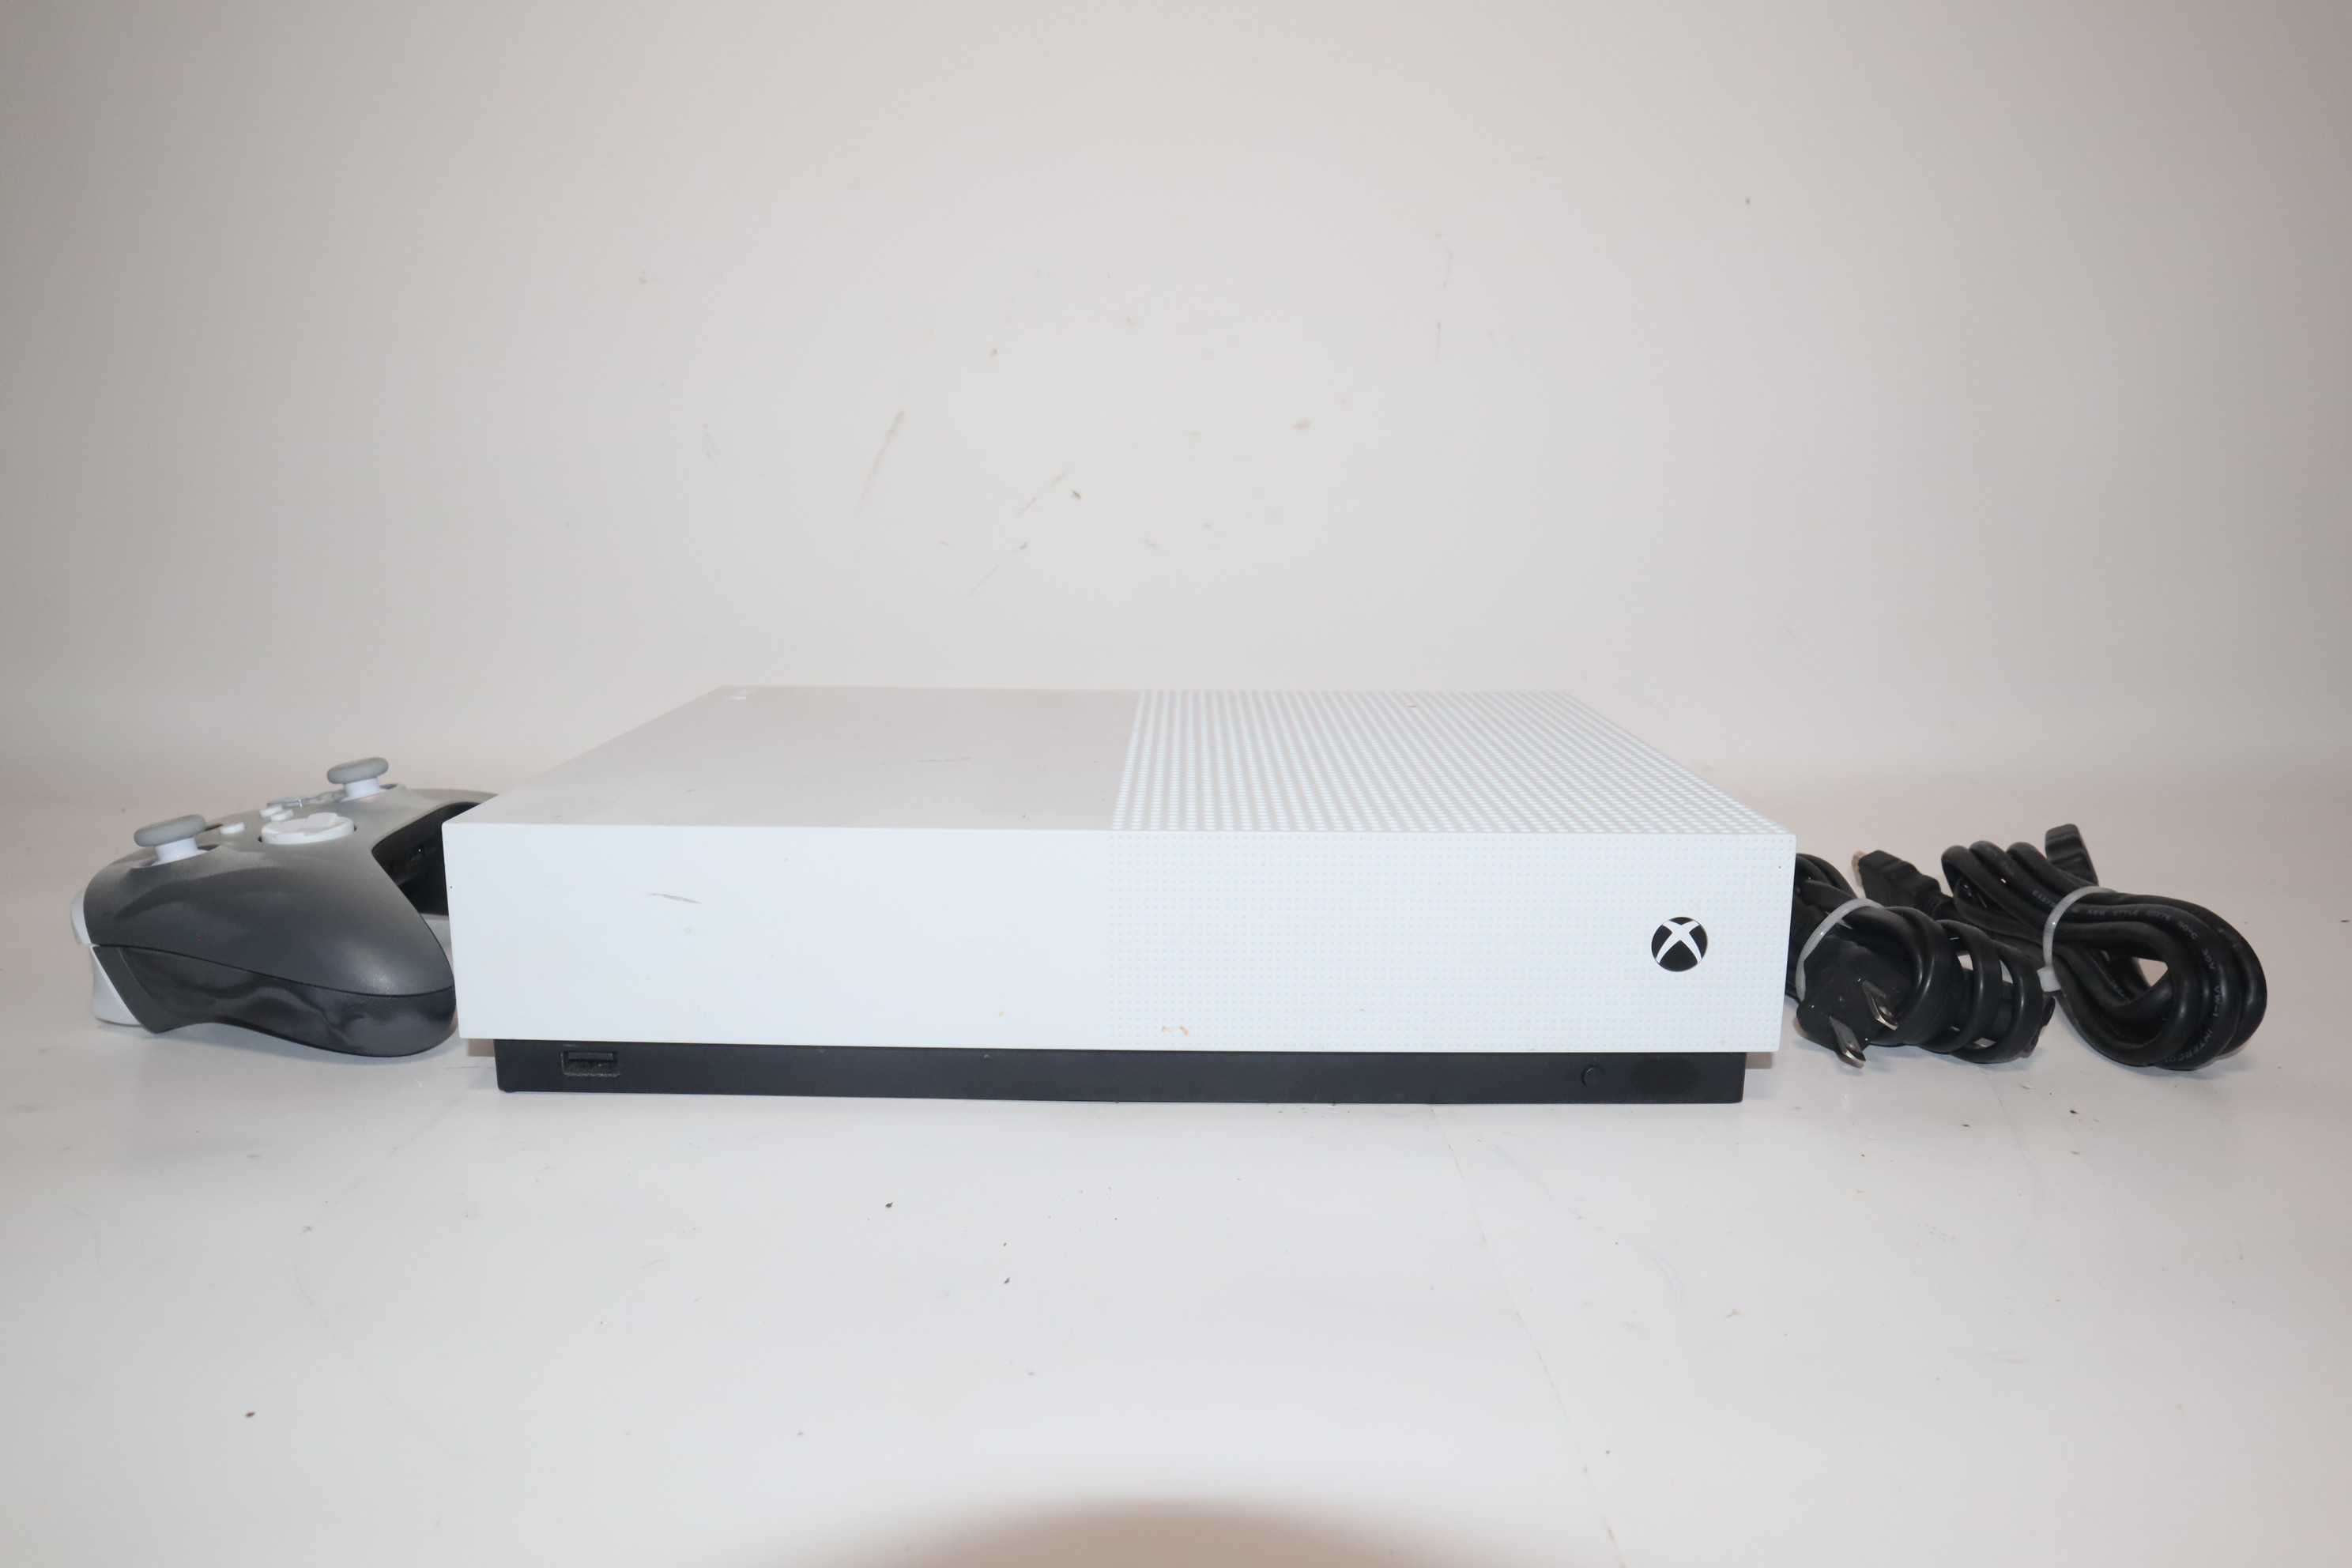 Microsoft Xbox One S All-Digital Edition 1TB White Console